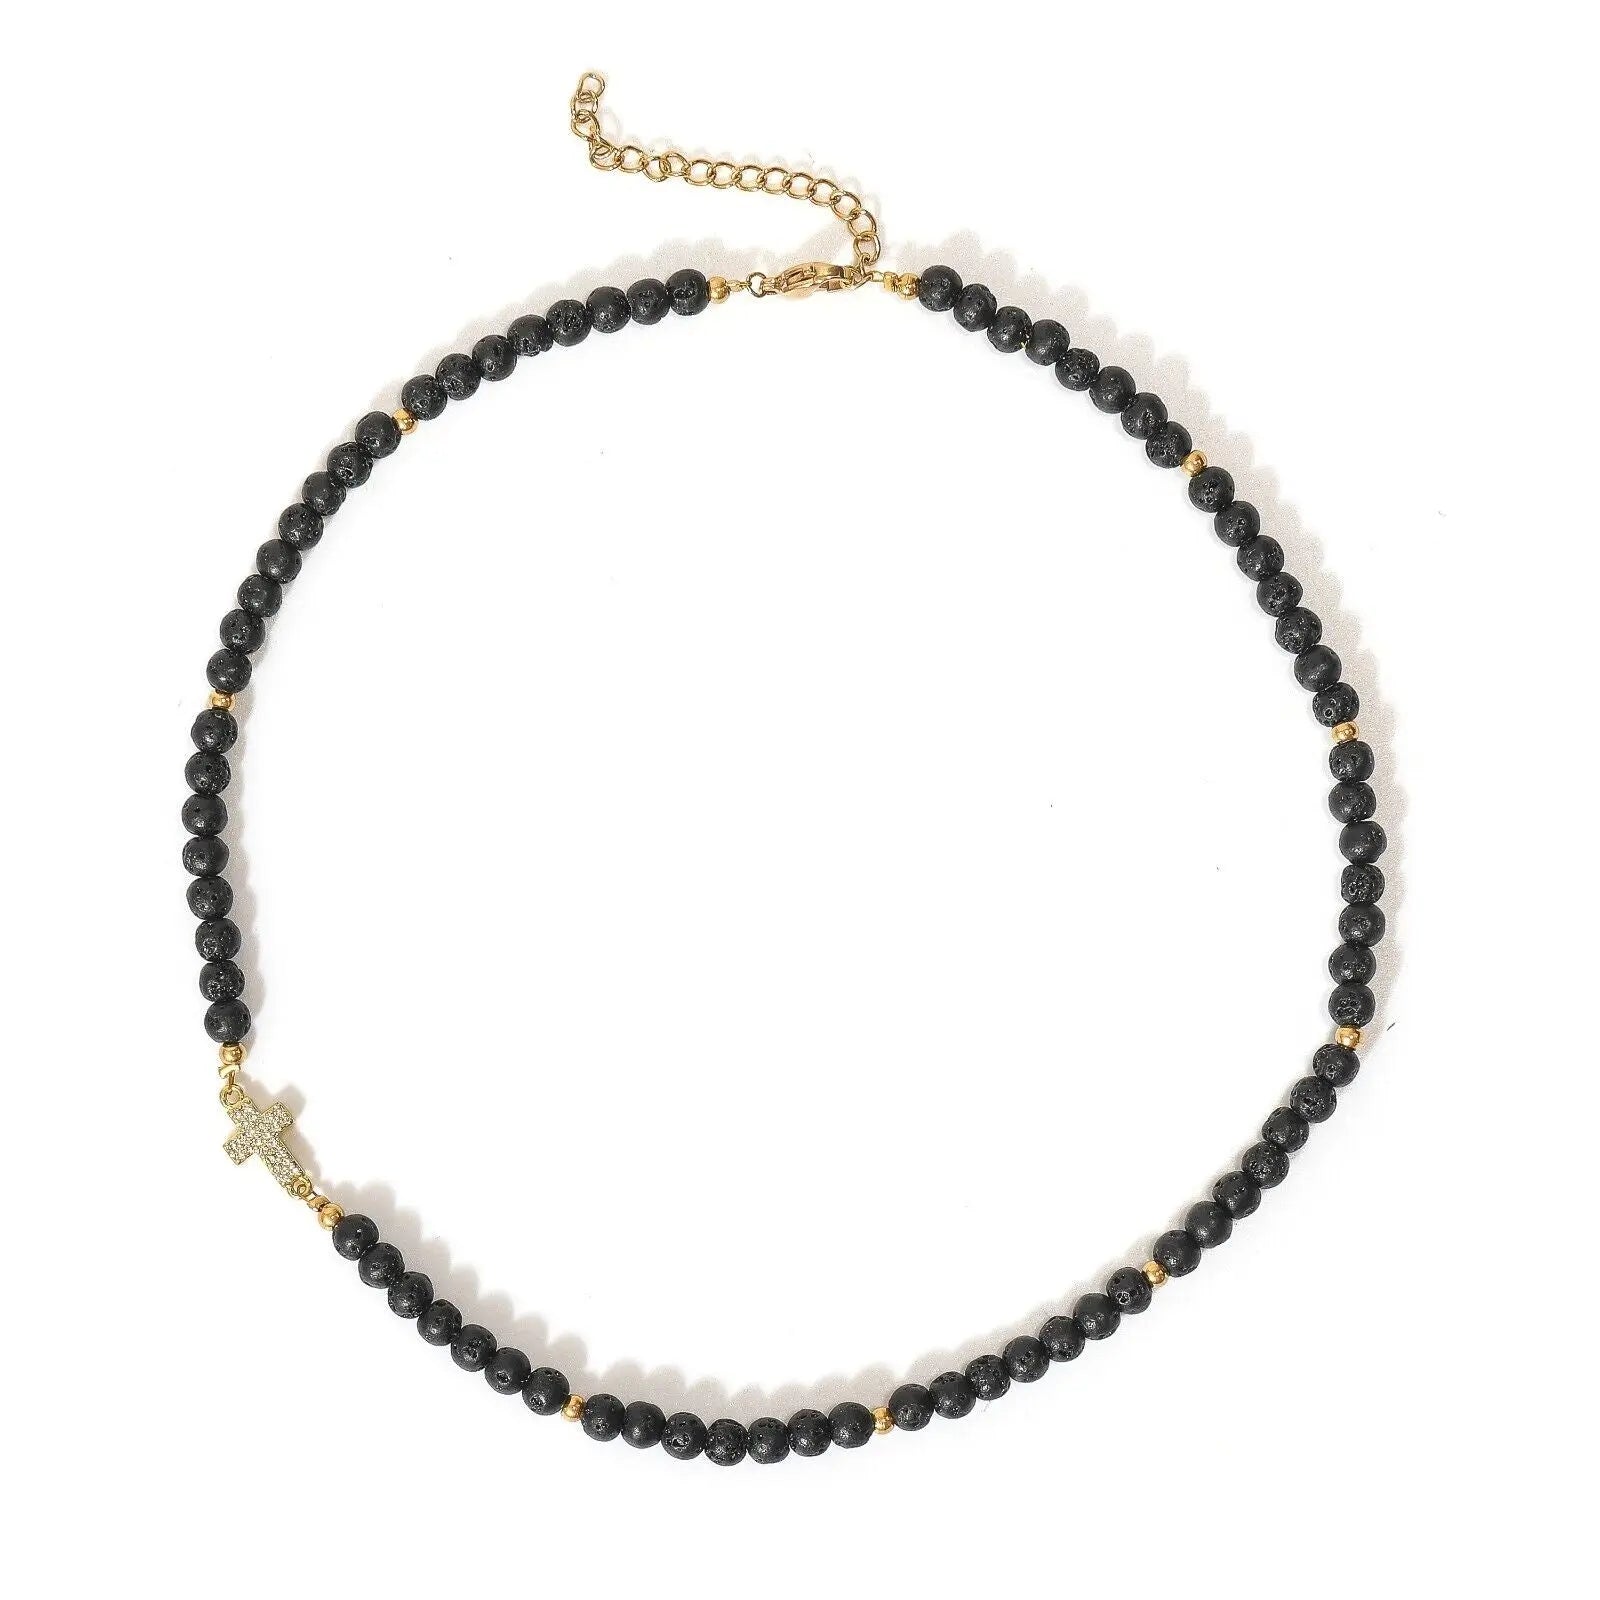 Lava Rock Beads Gemstones Unisex Necklace Choker with Cross Faith Necklace 15"